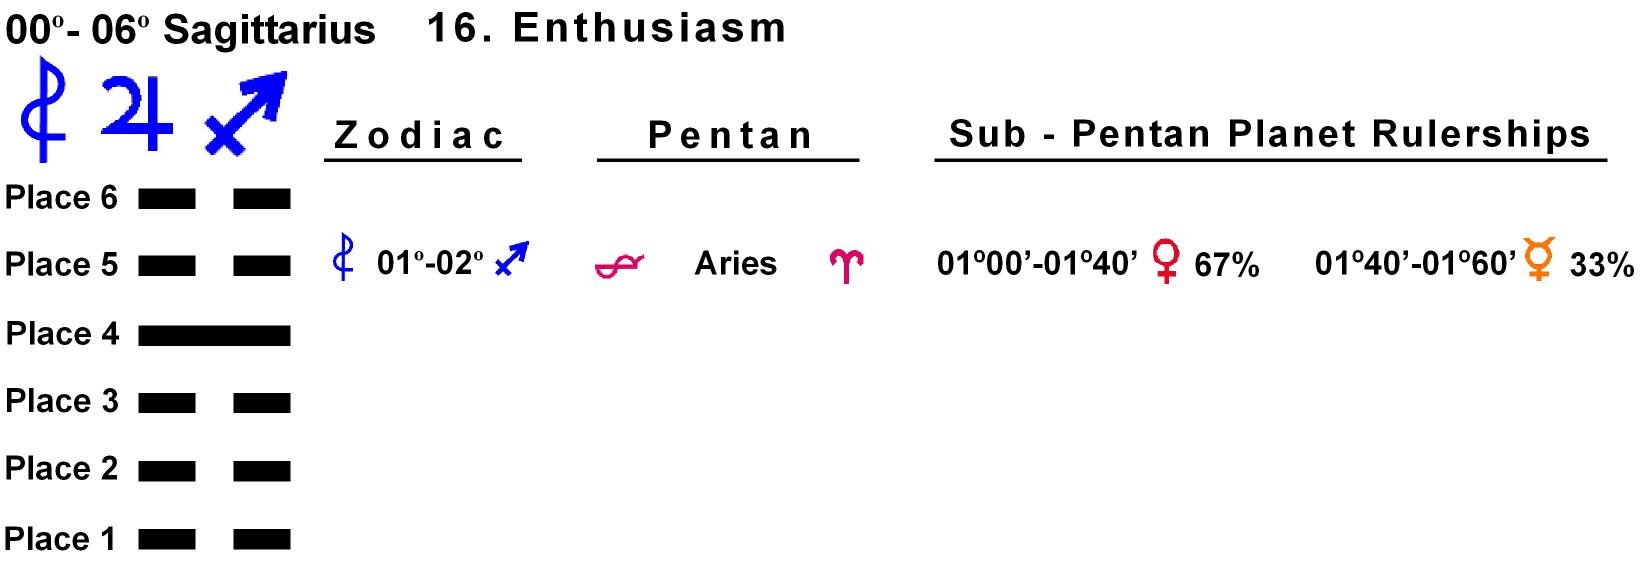 Pent-lines-09SA 01-02 Hx-16 Enthusiasm